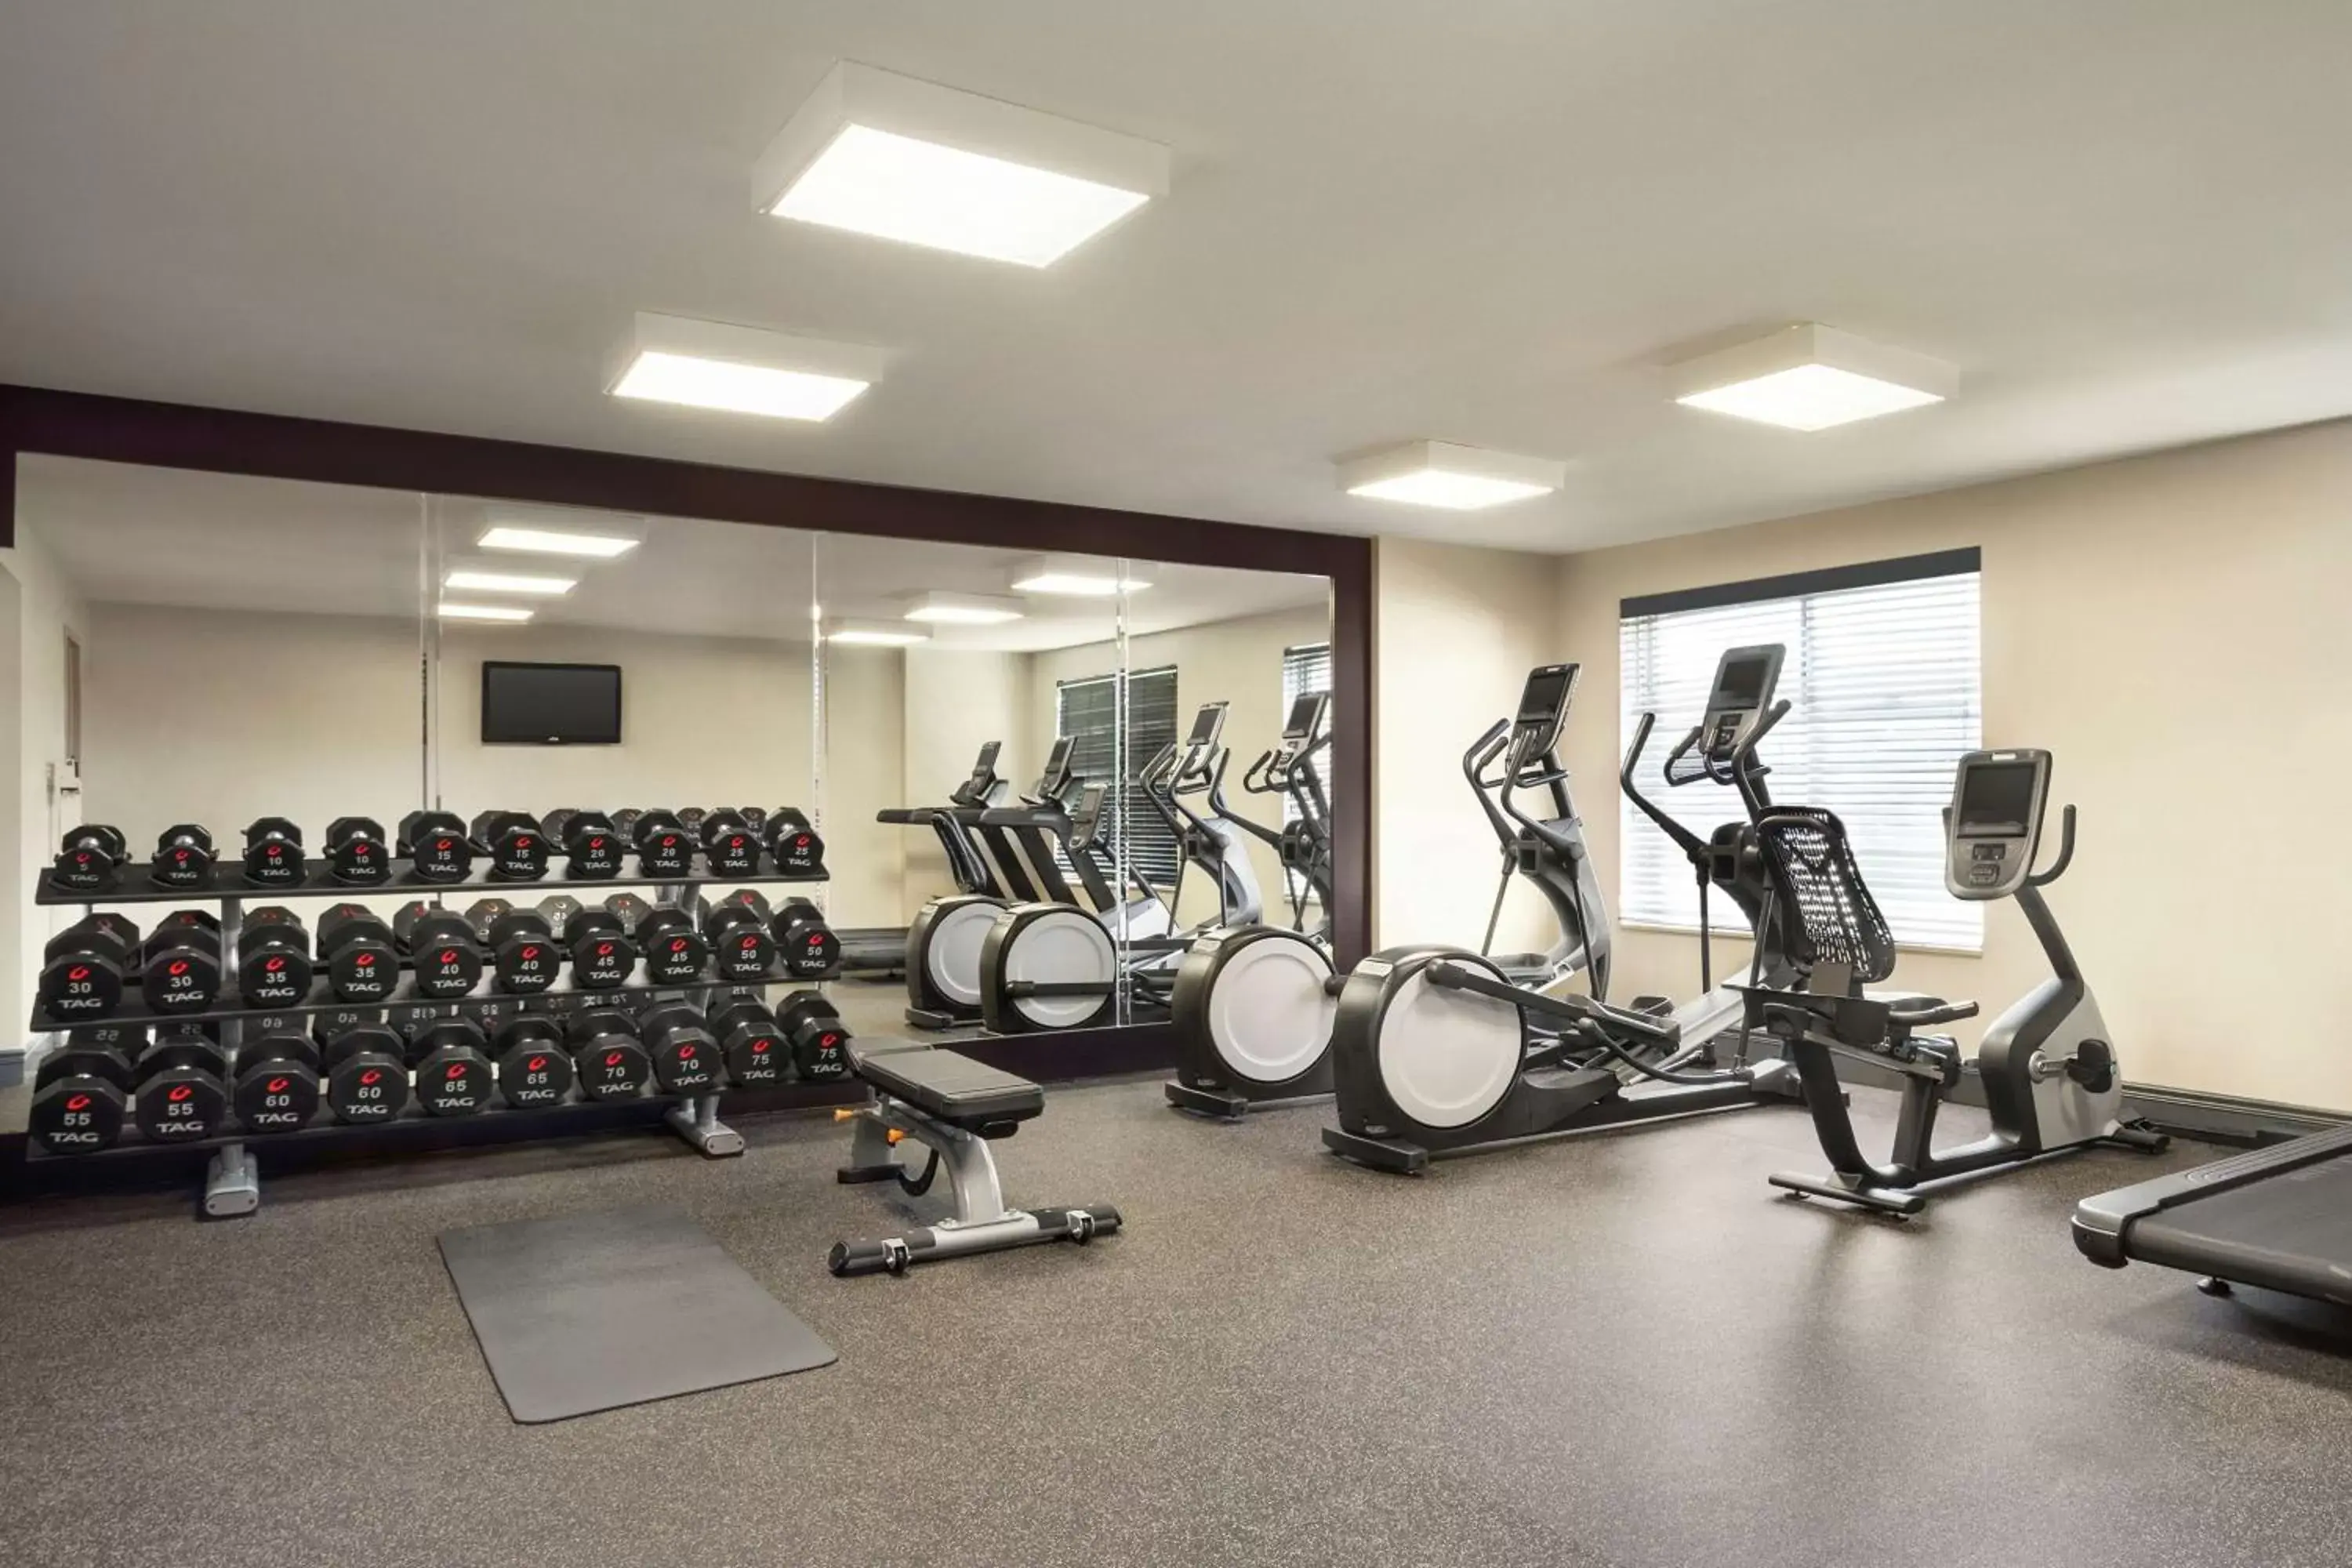 Fitness centre/facilities, Fitness Center/Facilities in Hilton Garden Inn New Orleans Convention Center